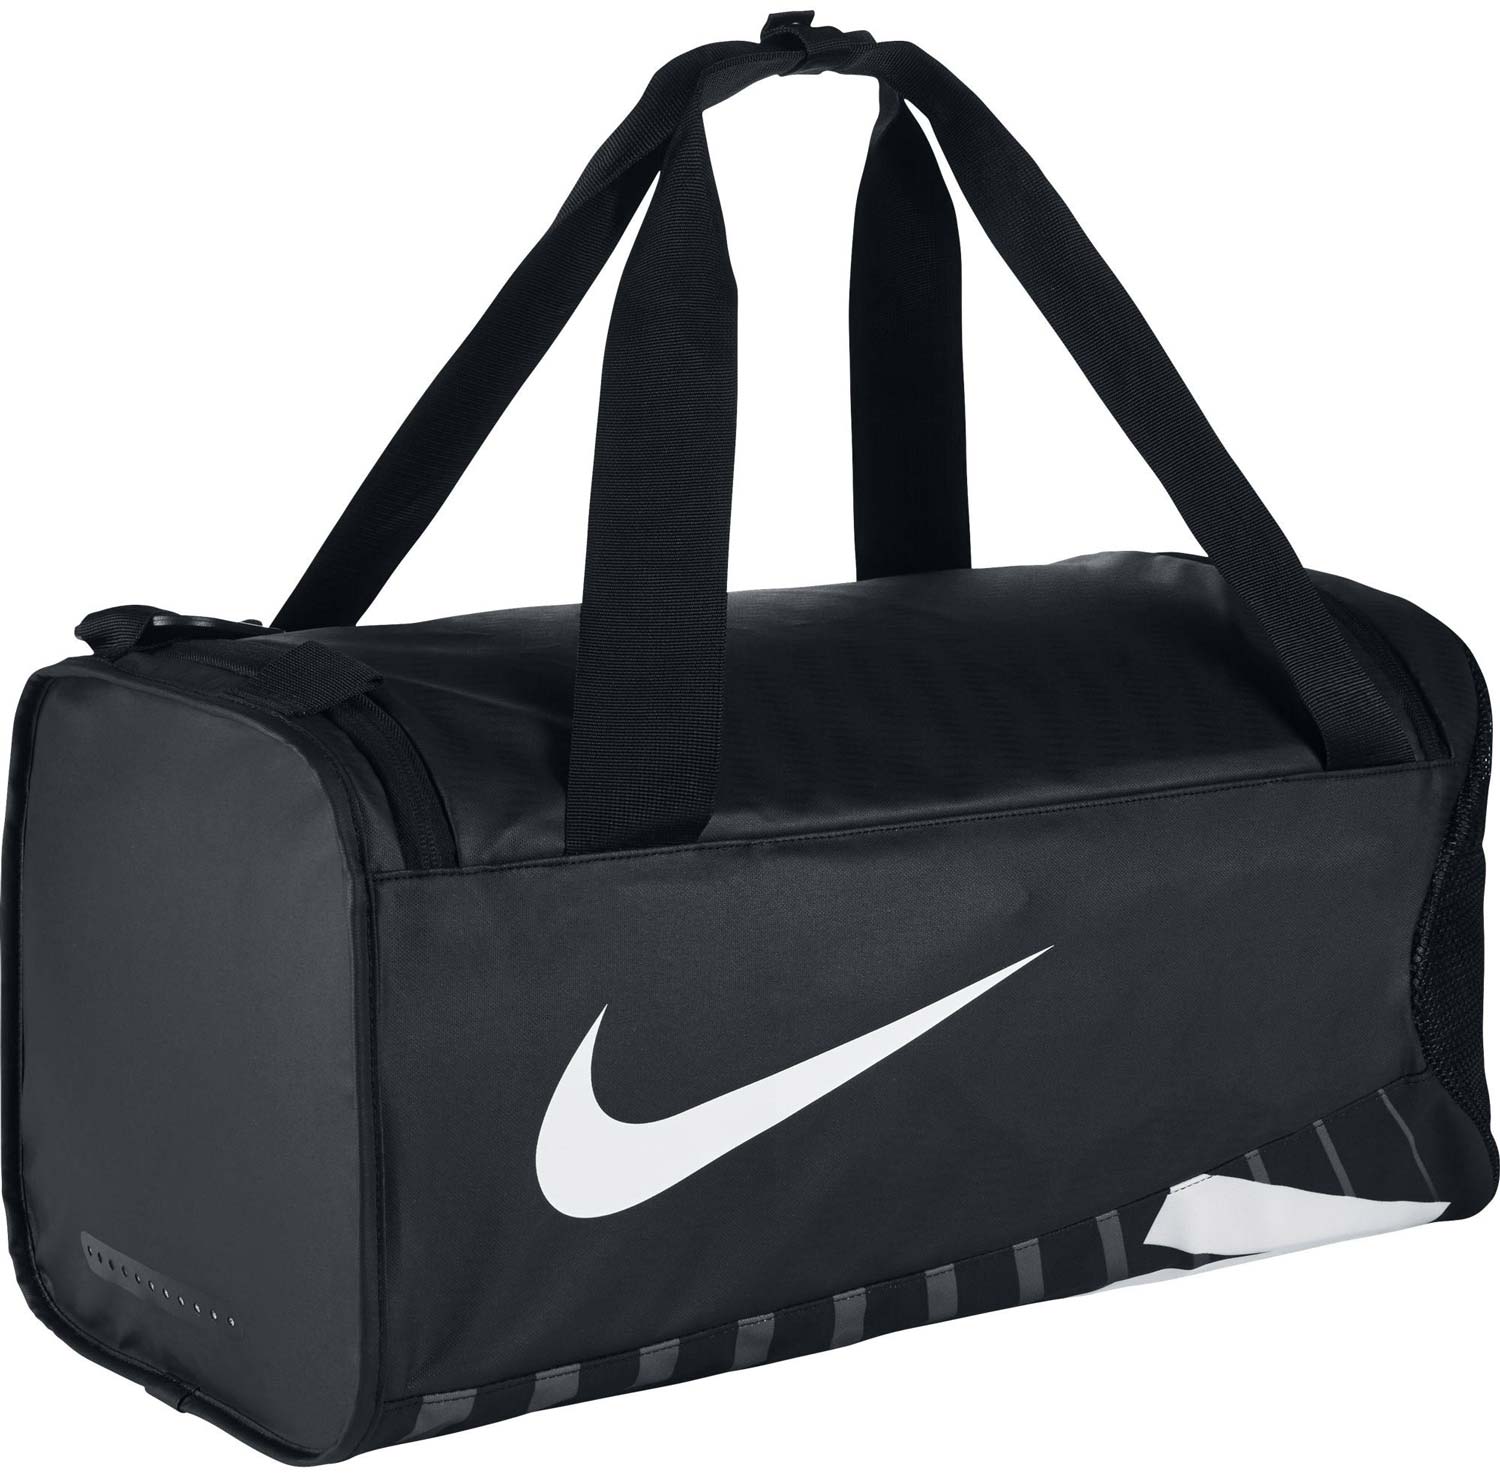 ALPHA ADAPT SMALL - Sporty bag